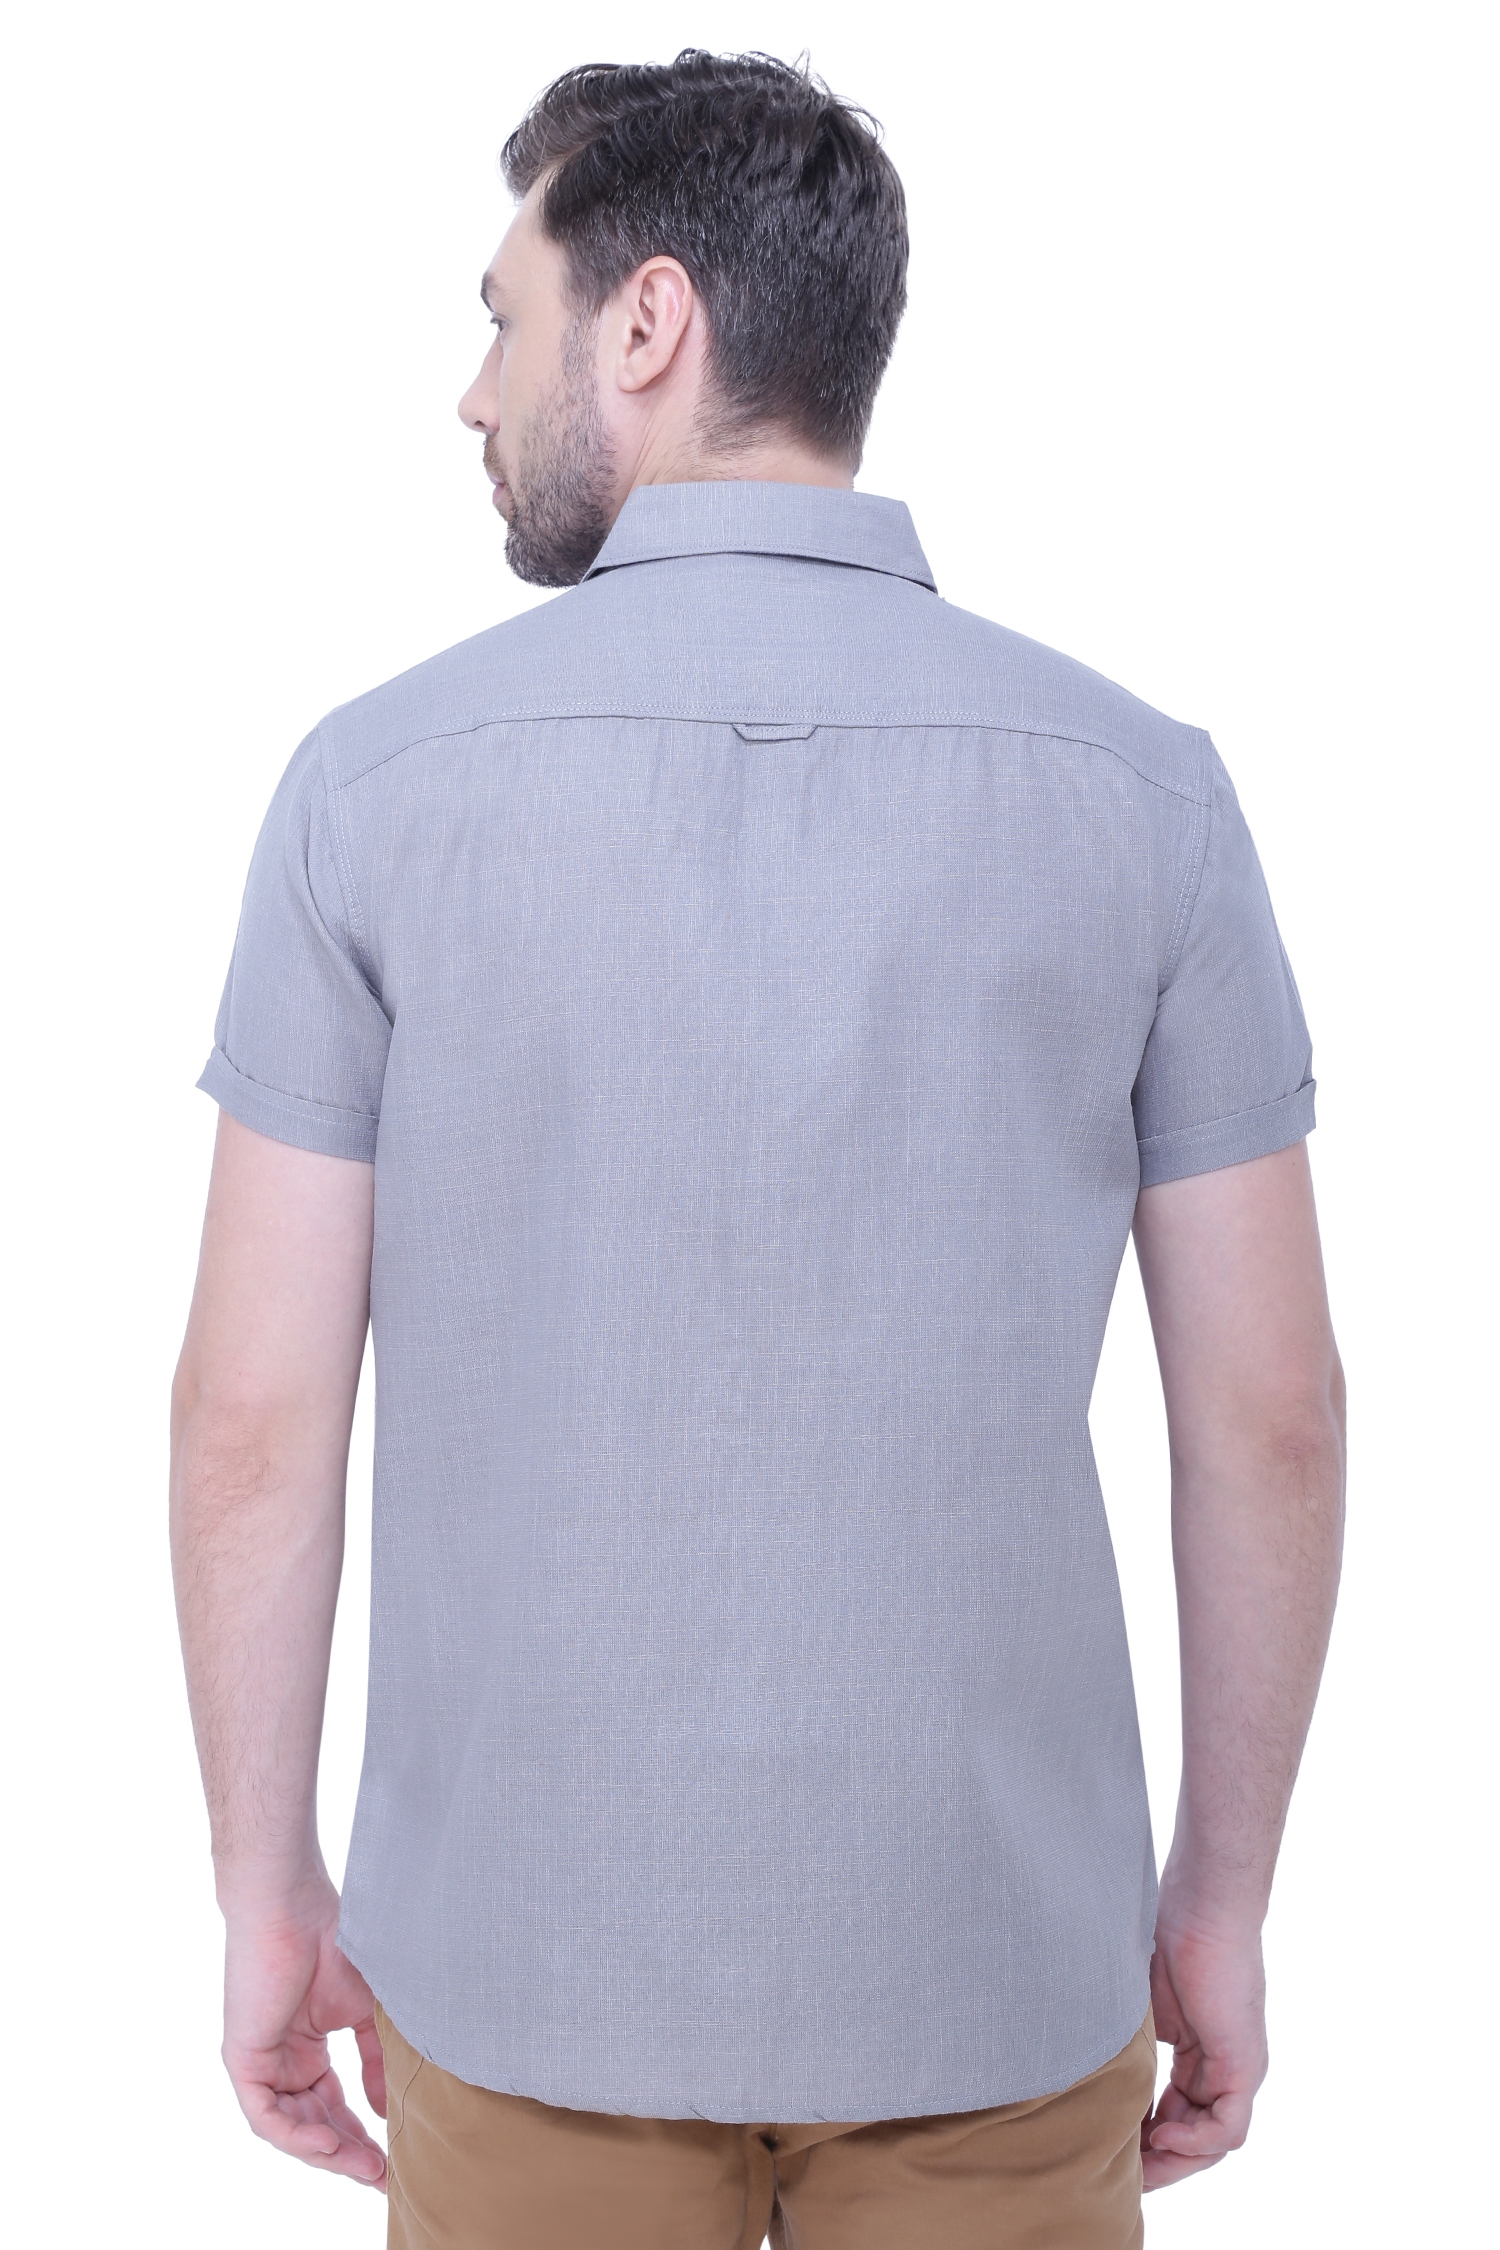 Kuons Avenue | Kuons Avenue Men's Linen Blend Half Sleeves Casual Shirt-KACLHS1236 2